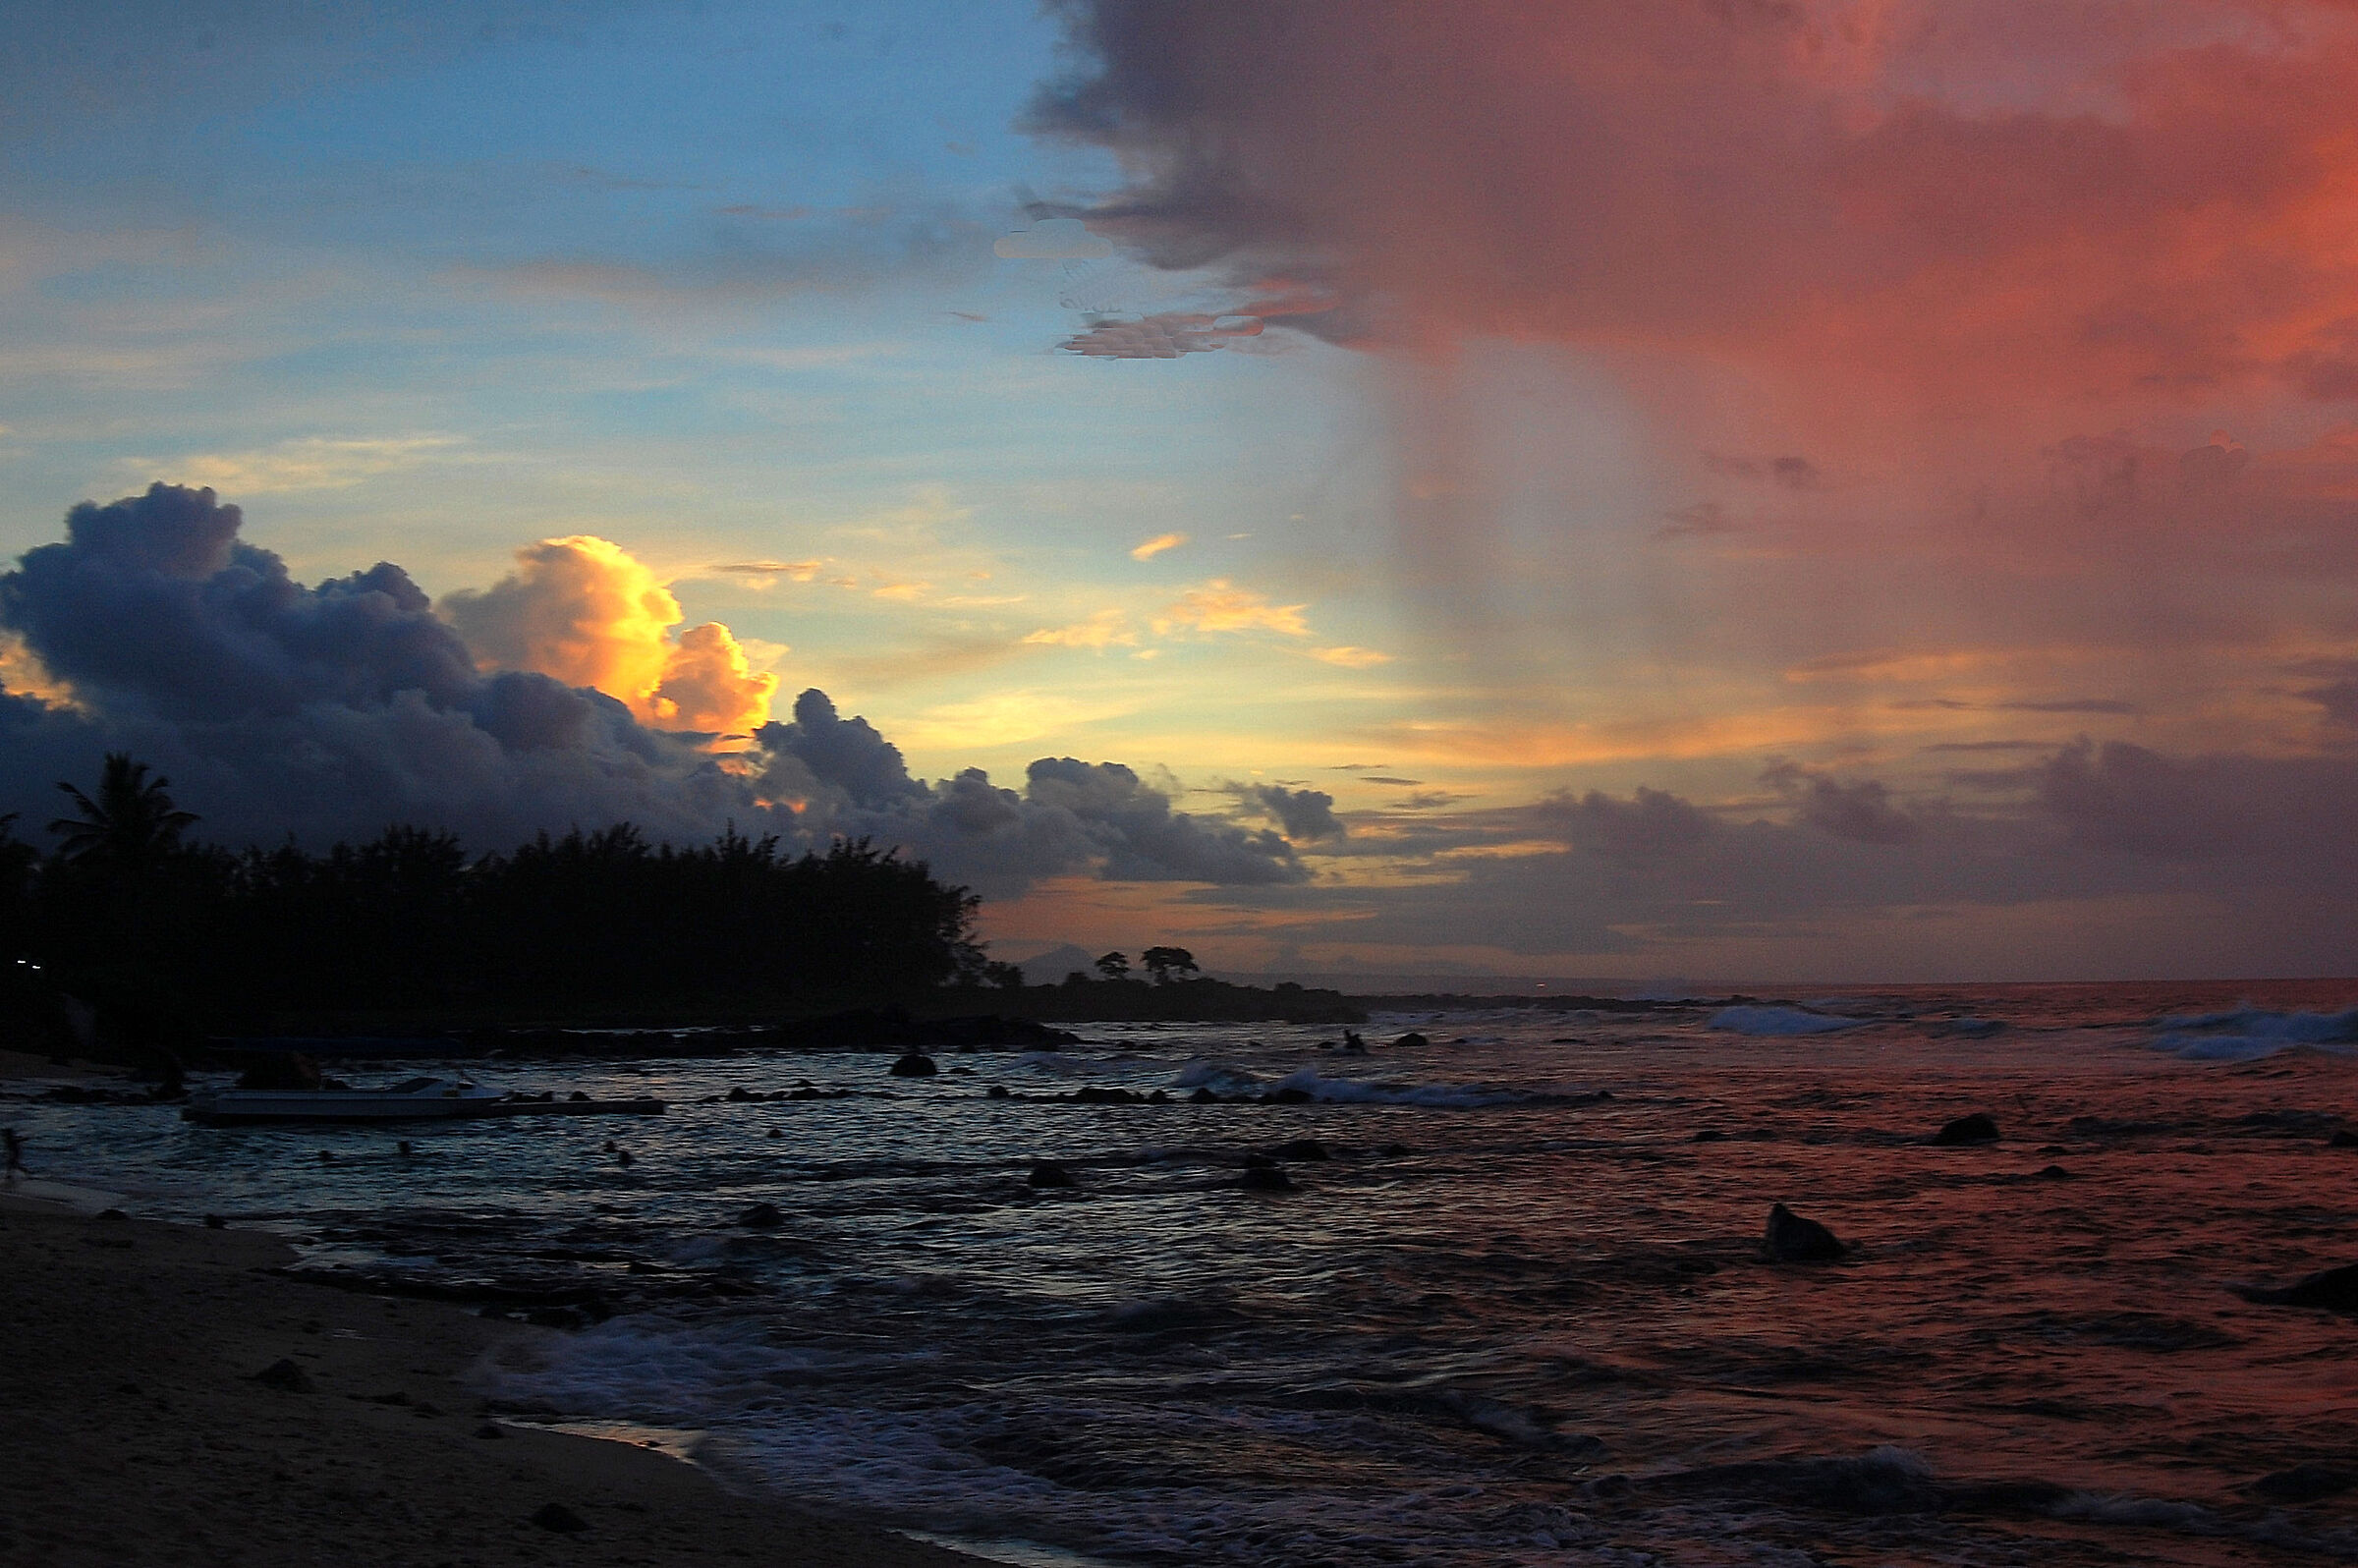 Mauritius: Storm warning...